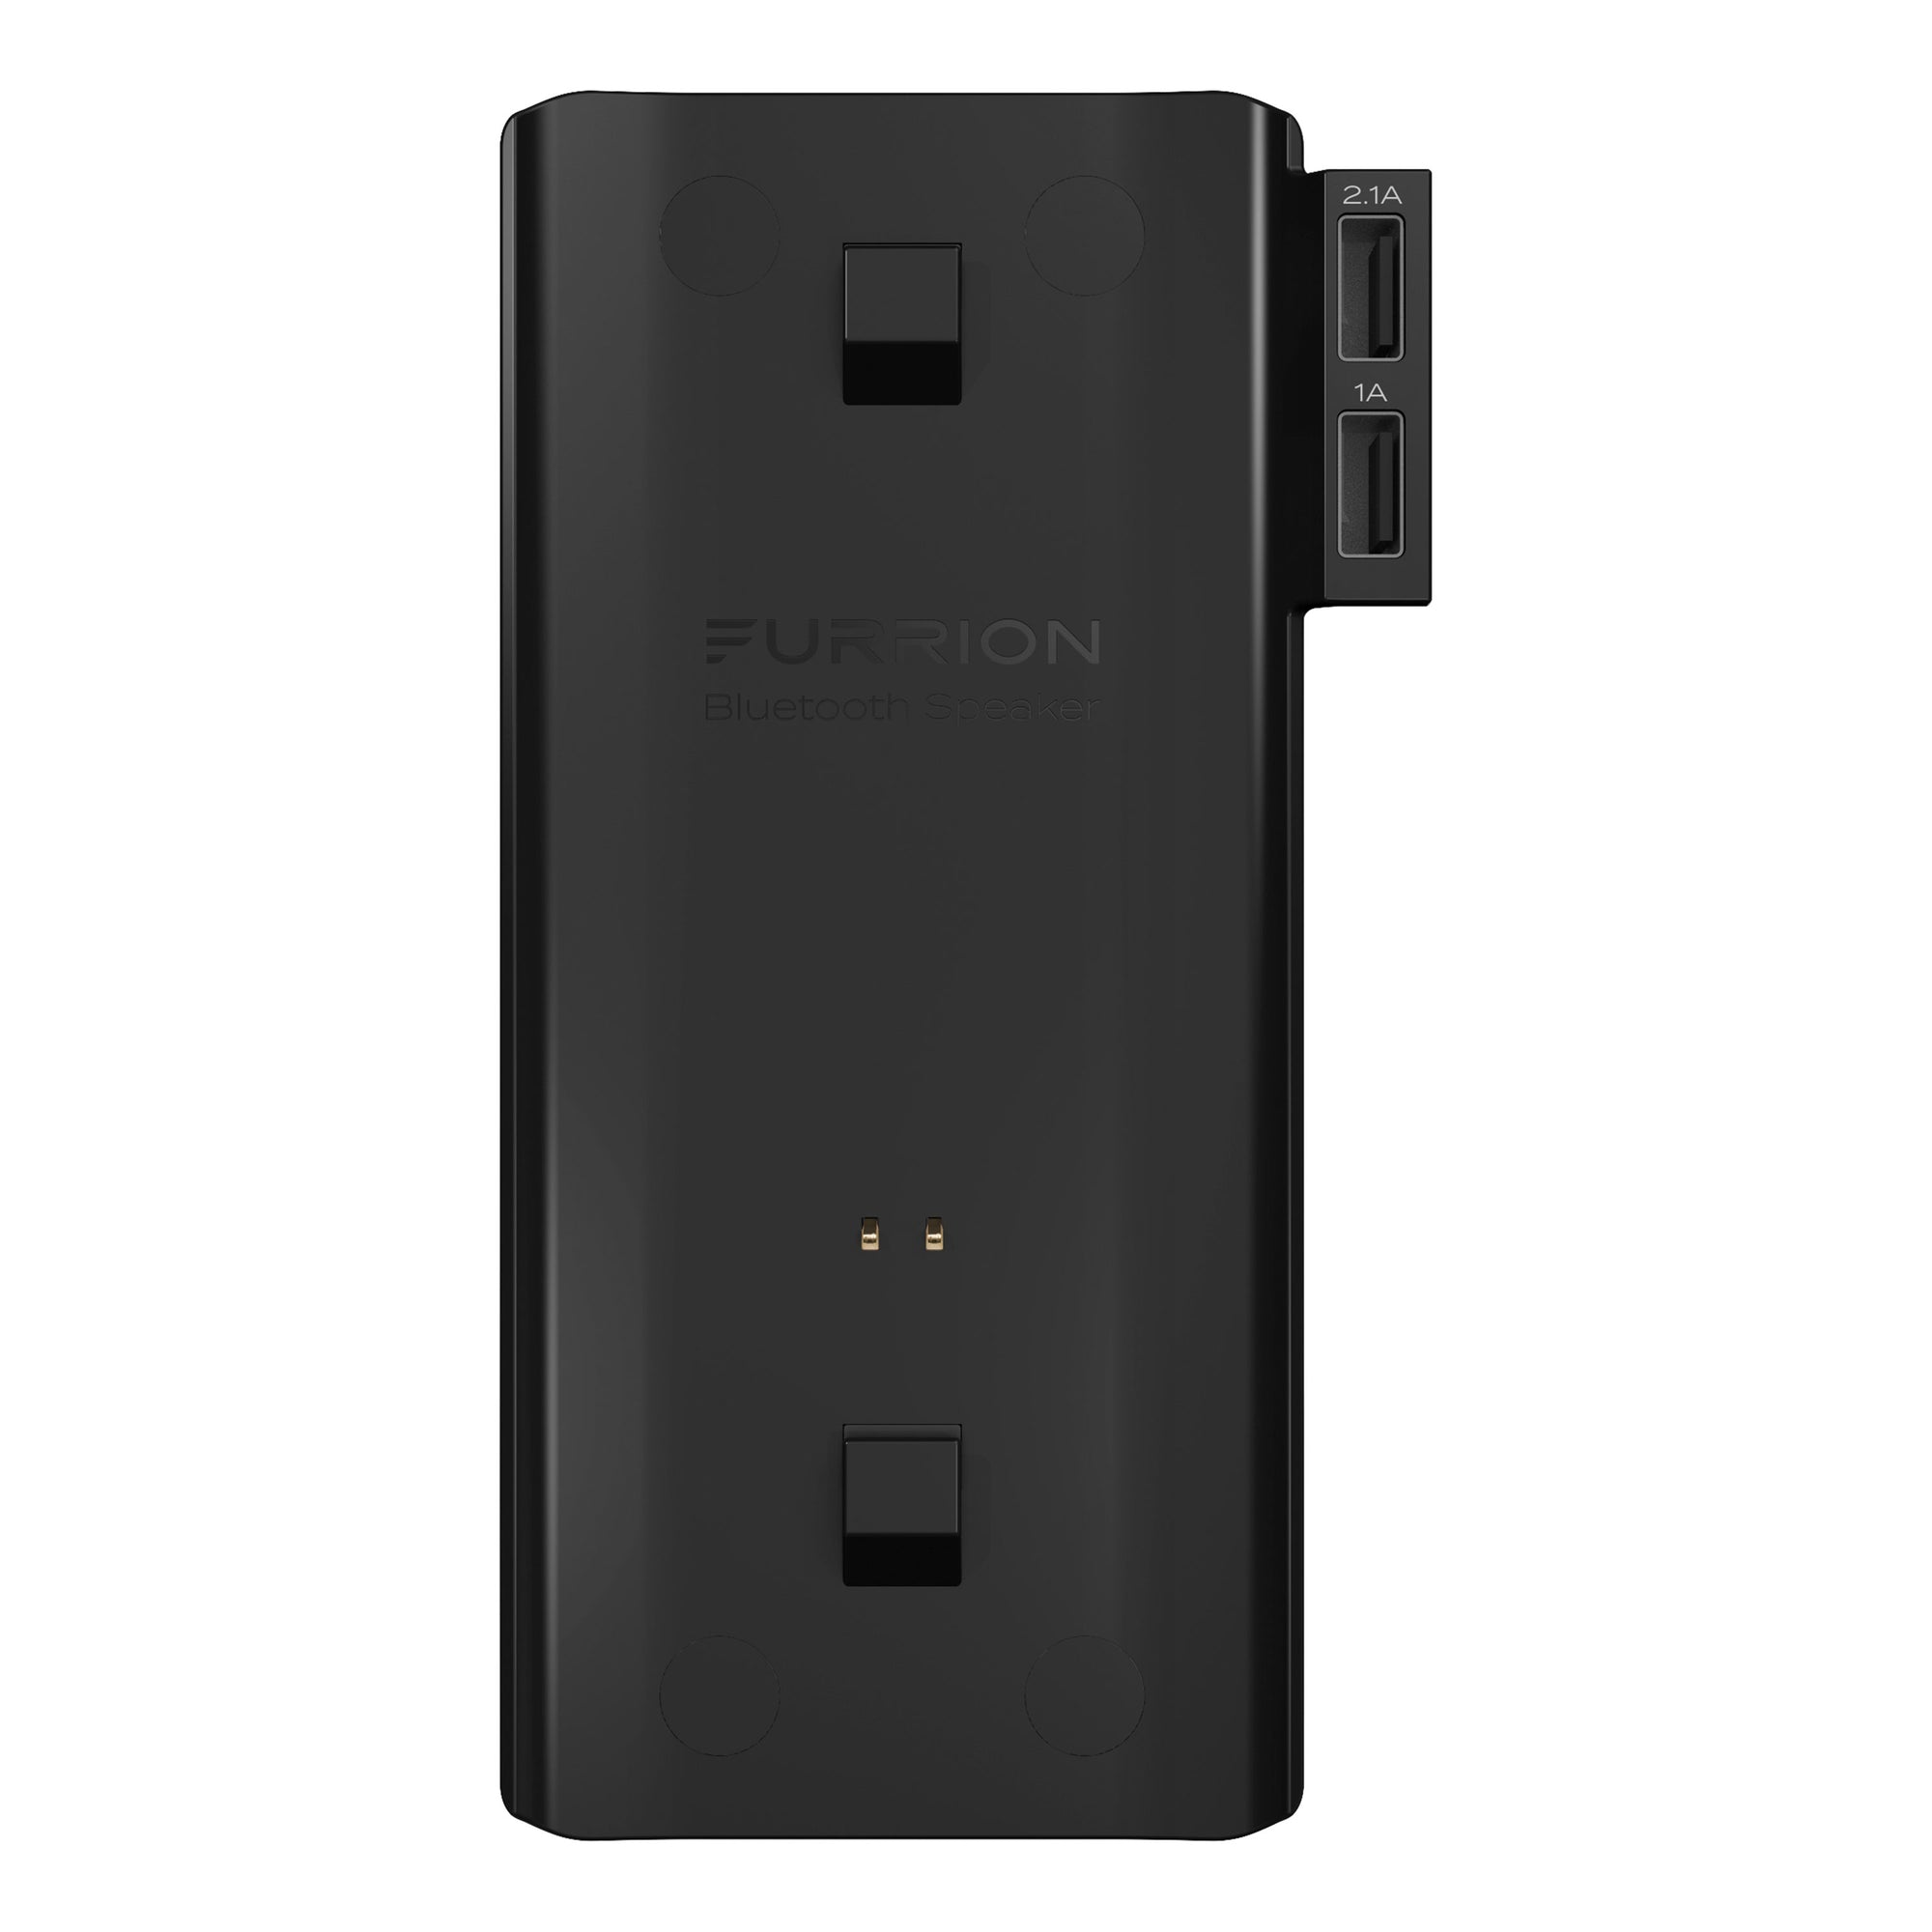 Furrion 2021123554 LIT Bluetooth Charging Dock